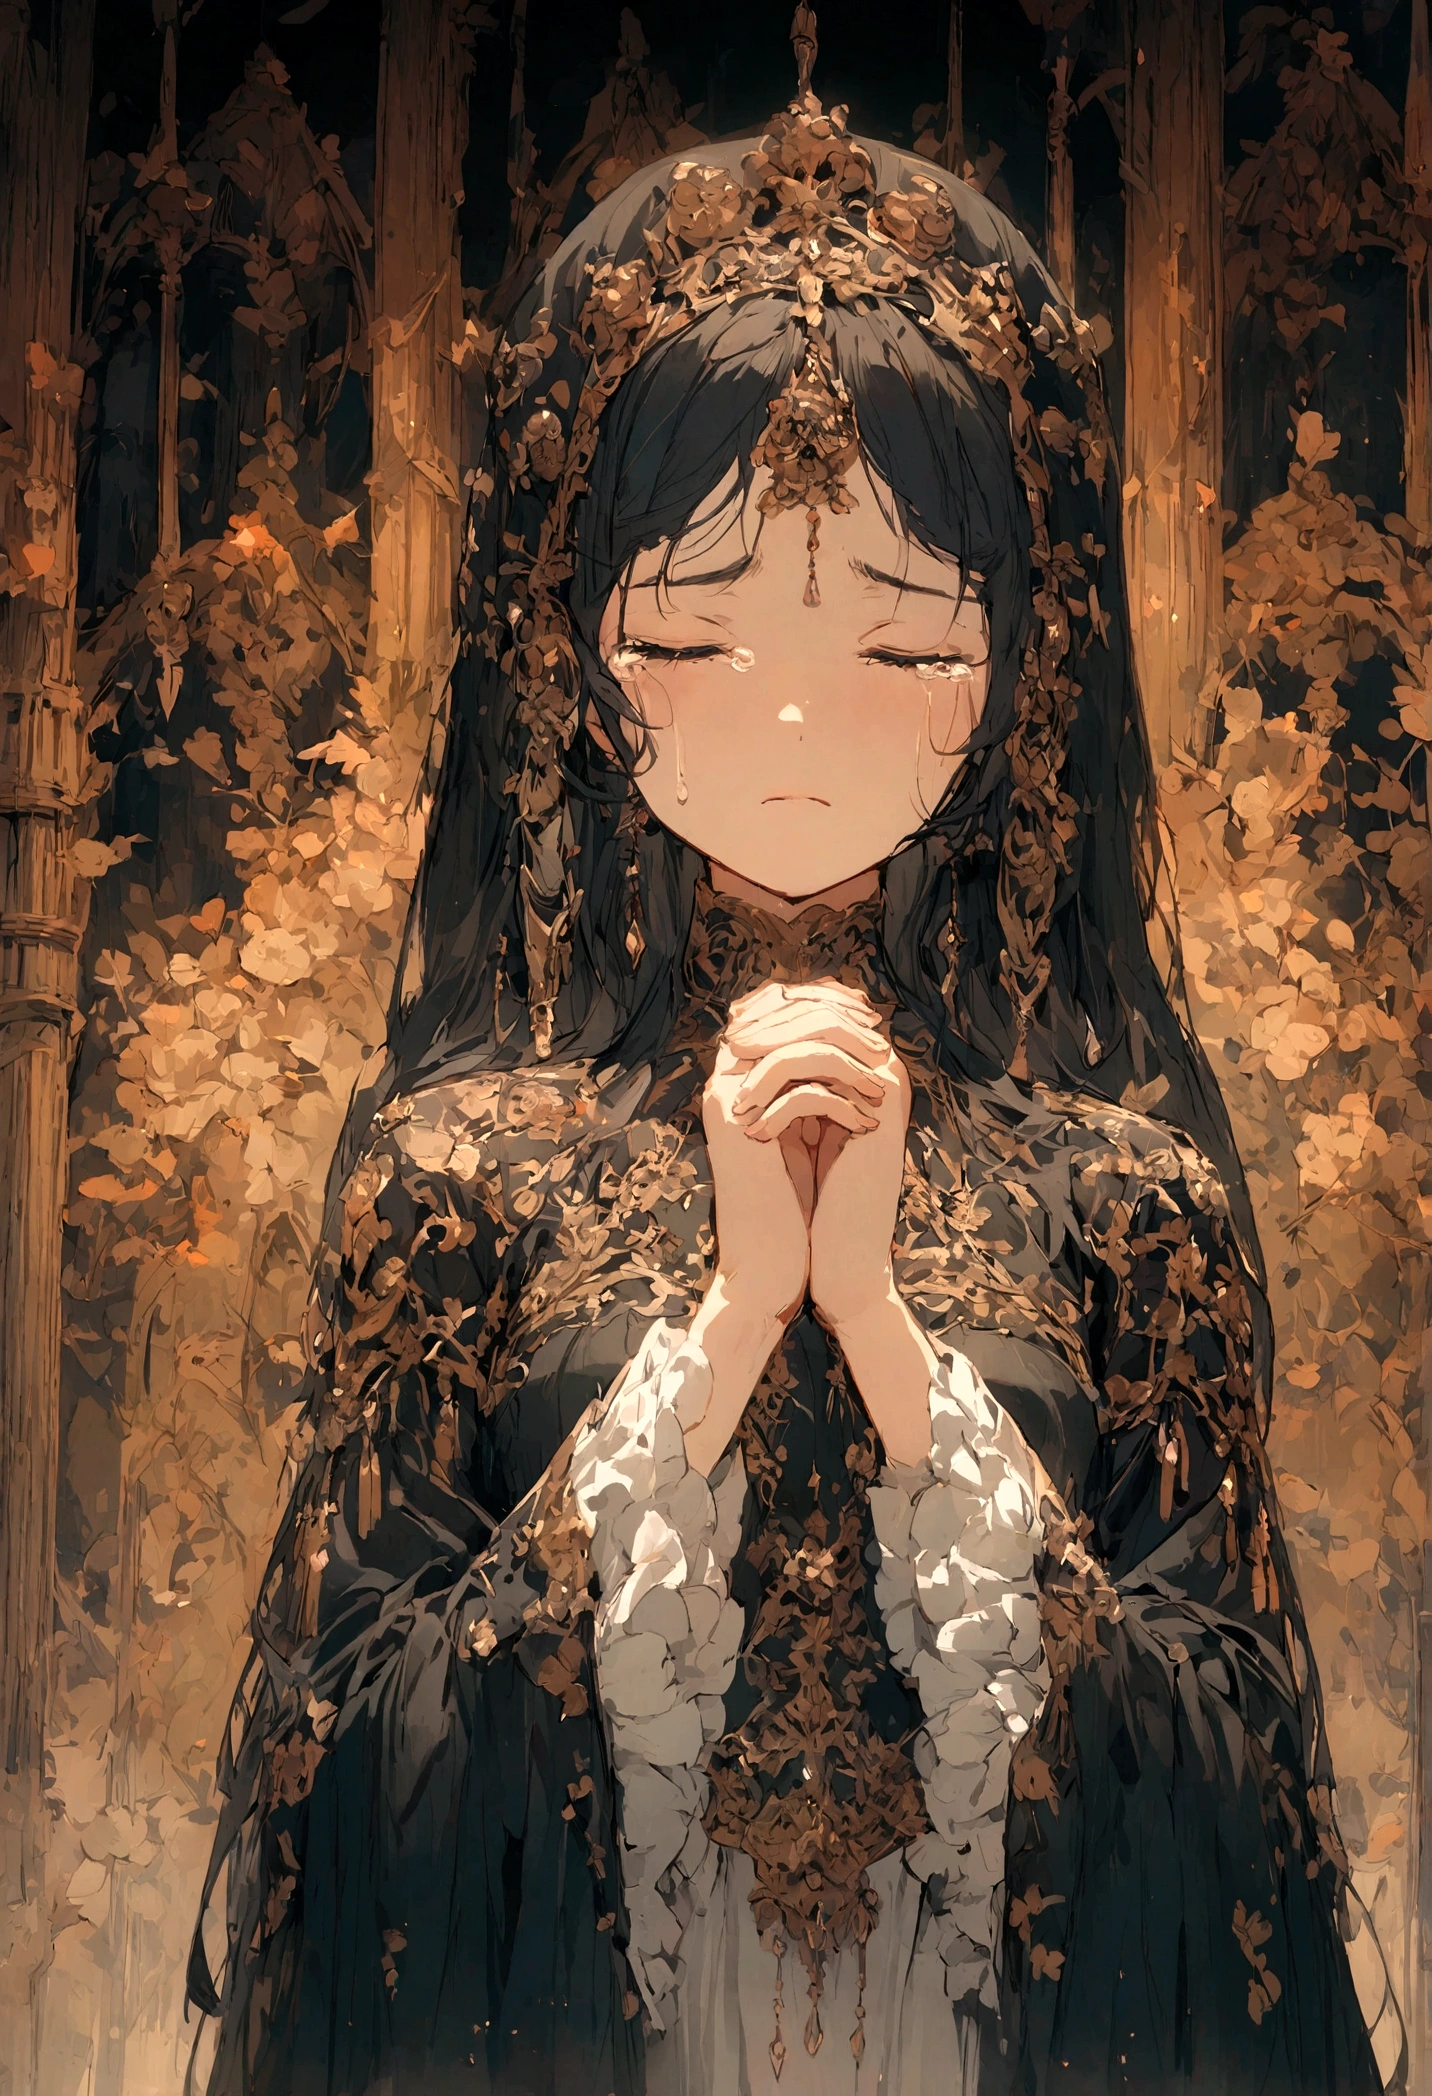 praying girls with tears